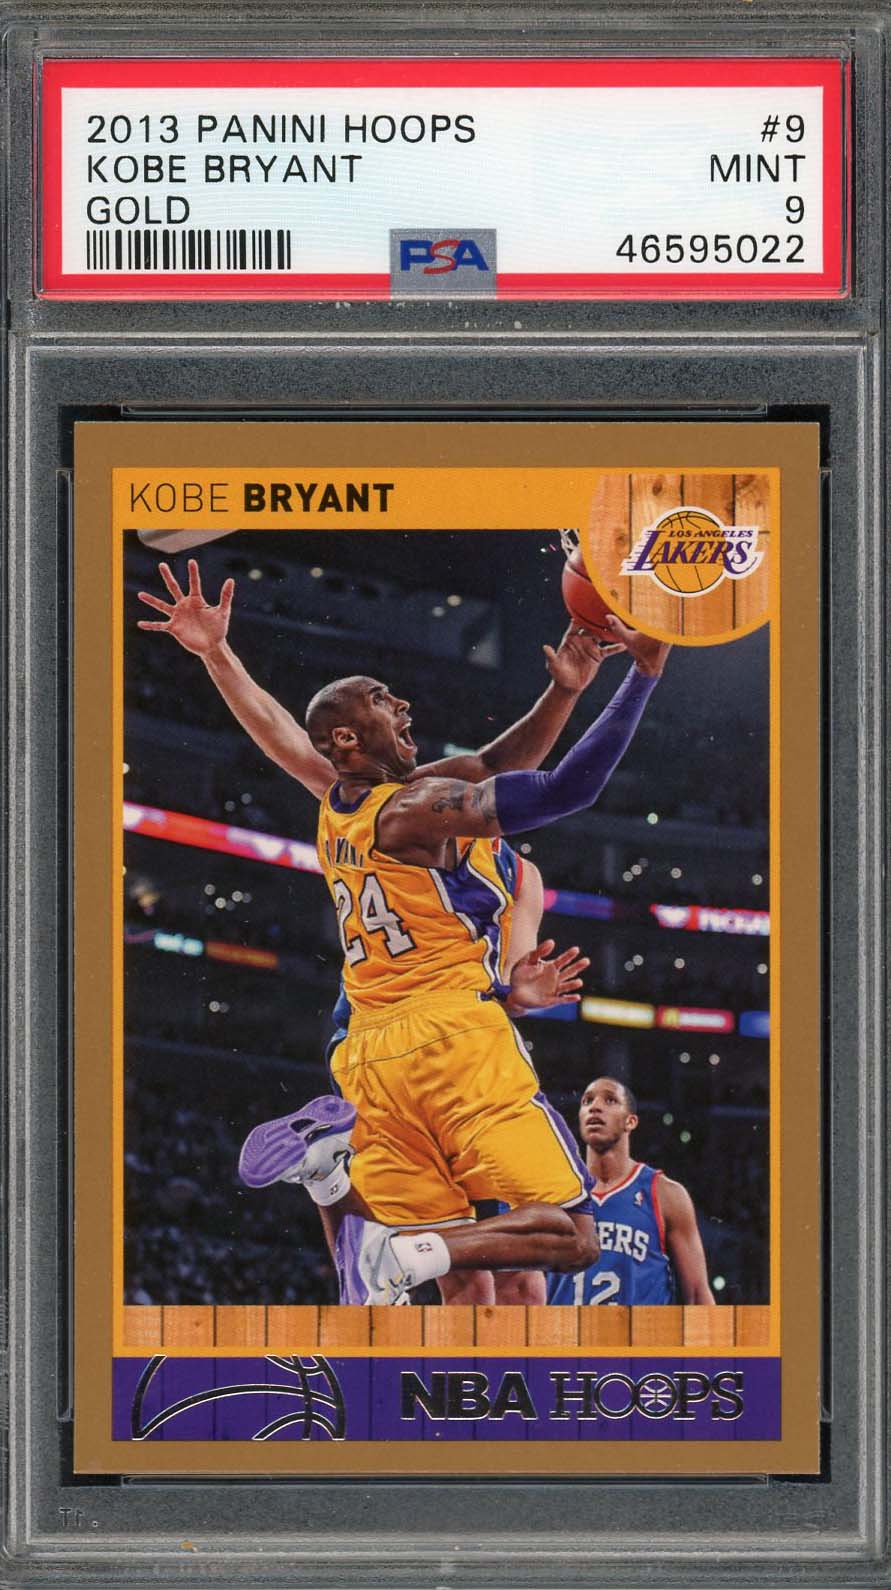 Kobe Bryant 2013 Panini Hoops Gold Basketball Card #9 Graded PSA 9 MIN